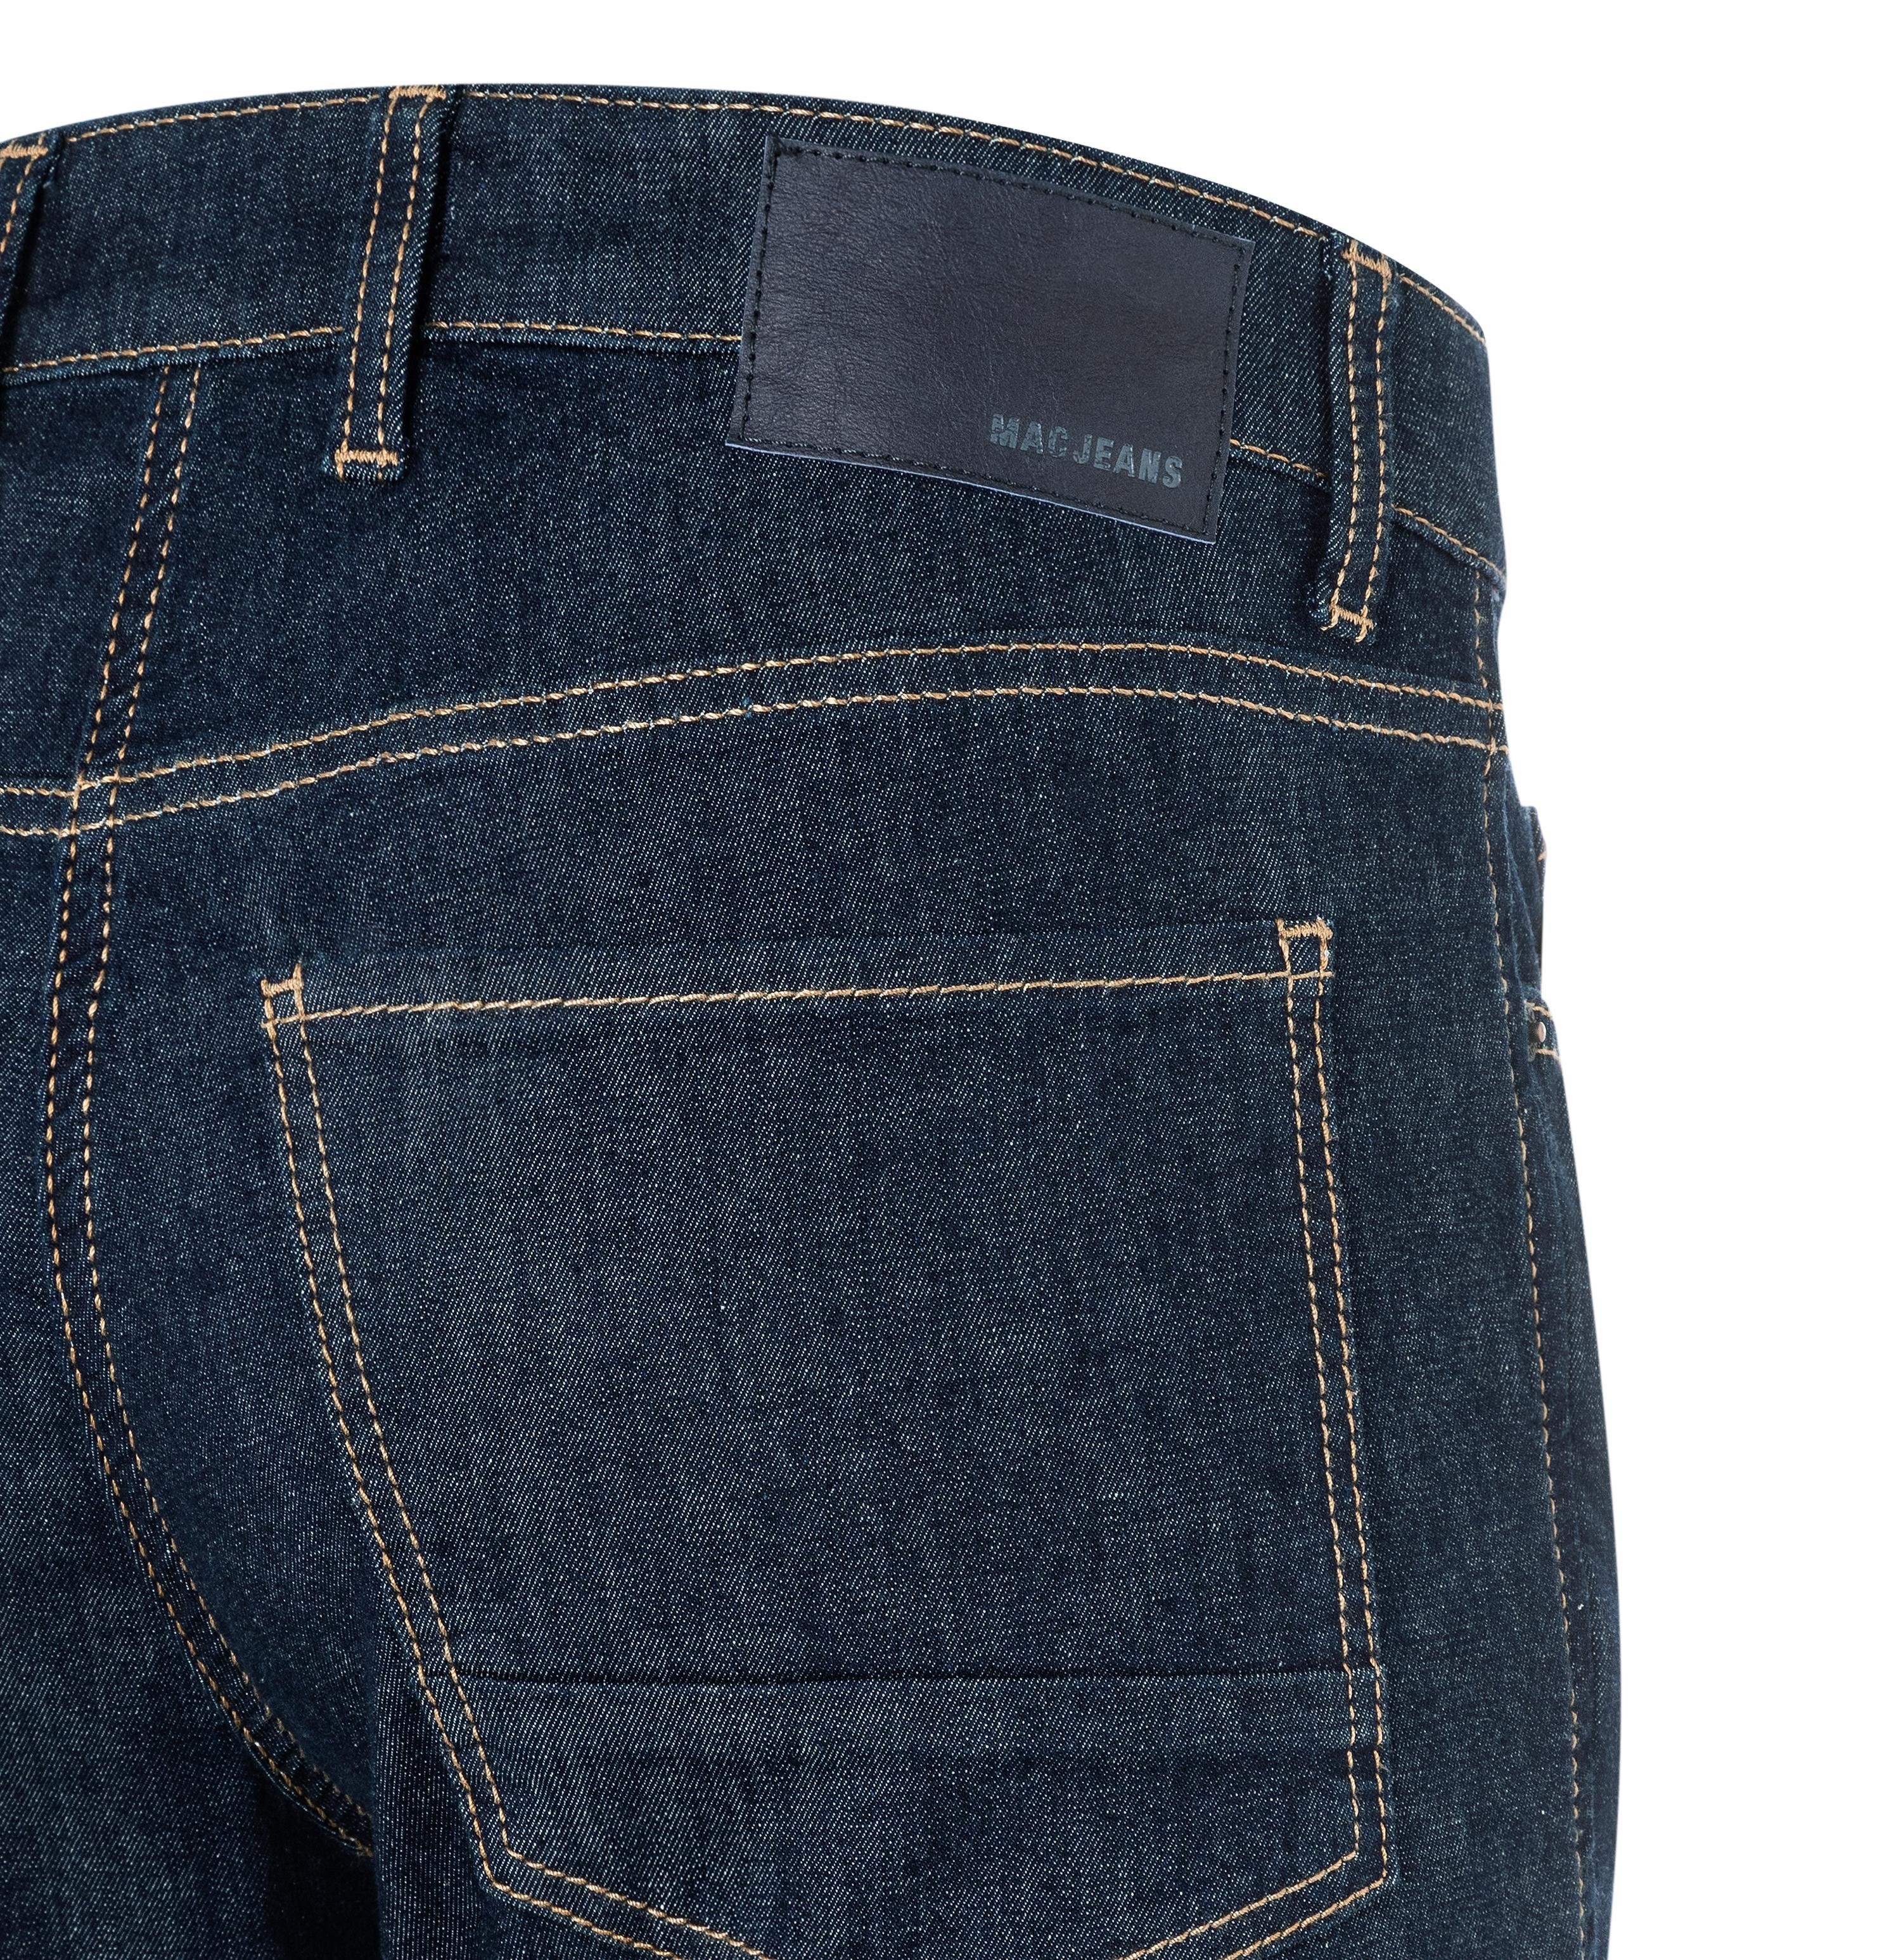 Denim, Weight Sommerjeans MAC H702 Light 5-Pocket-Jeans Arne Dark Rinsed Blue leichte